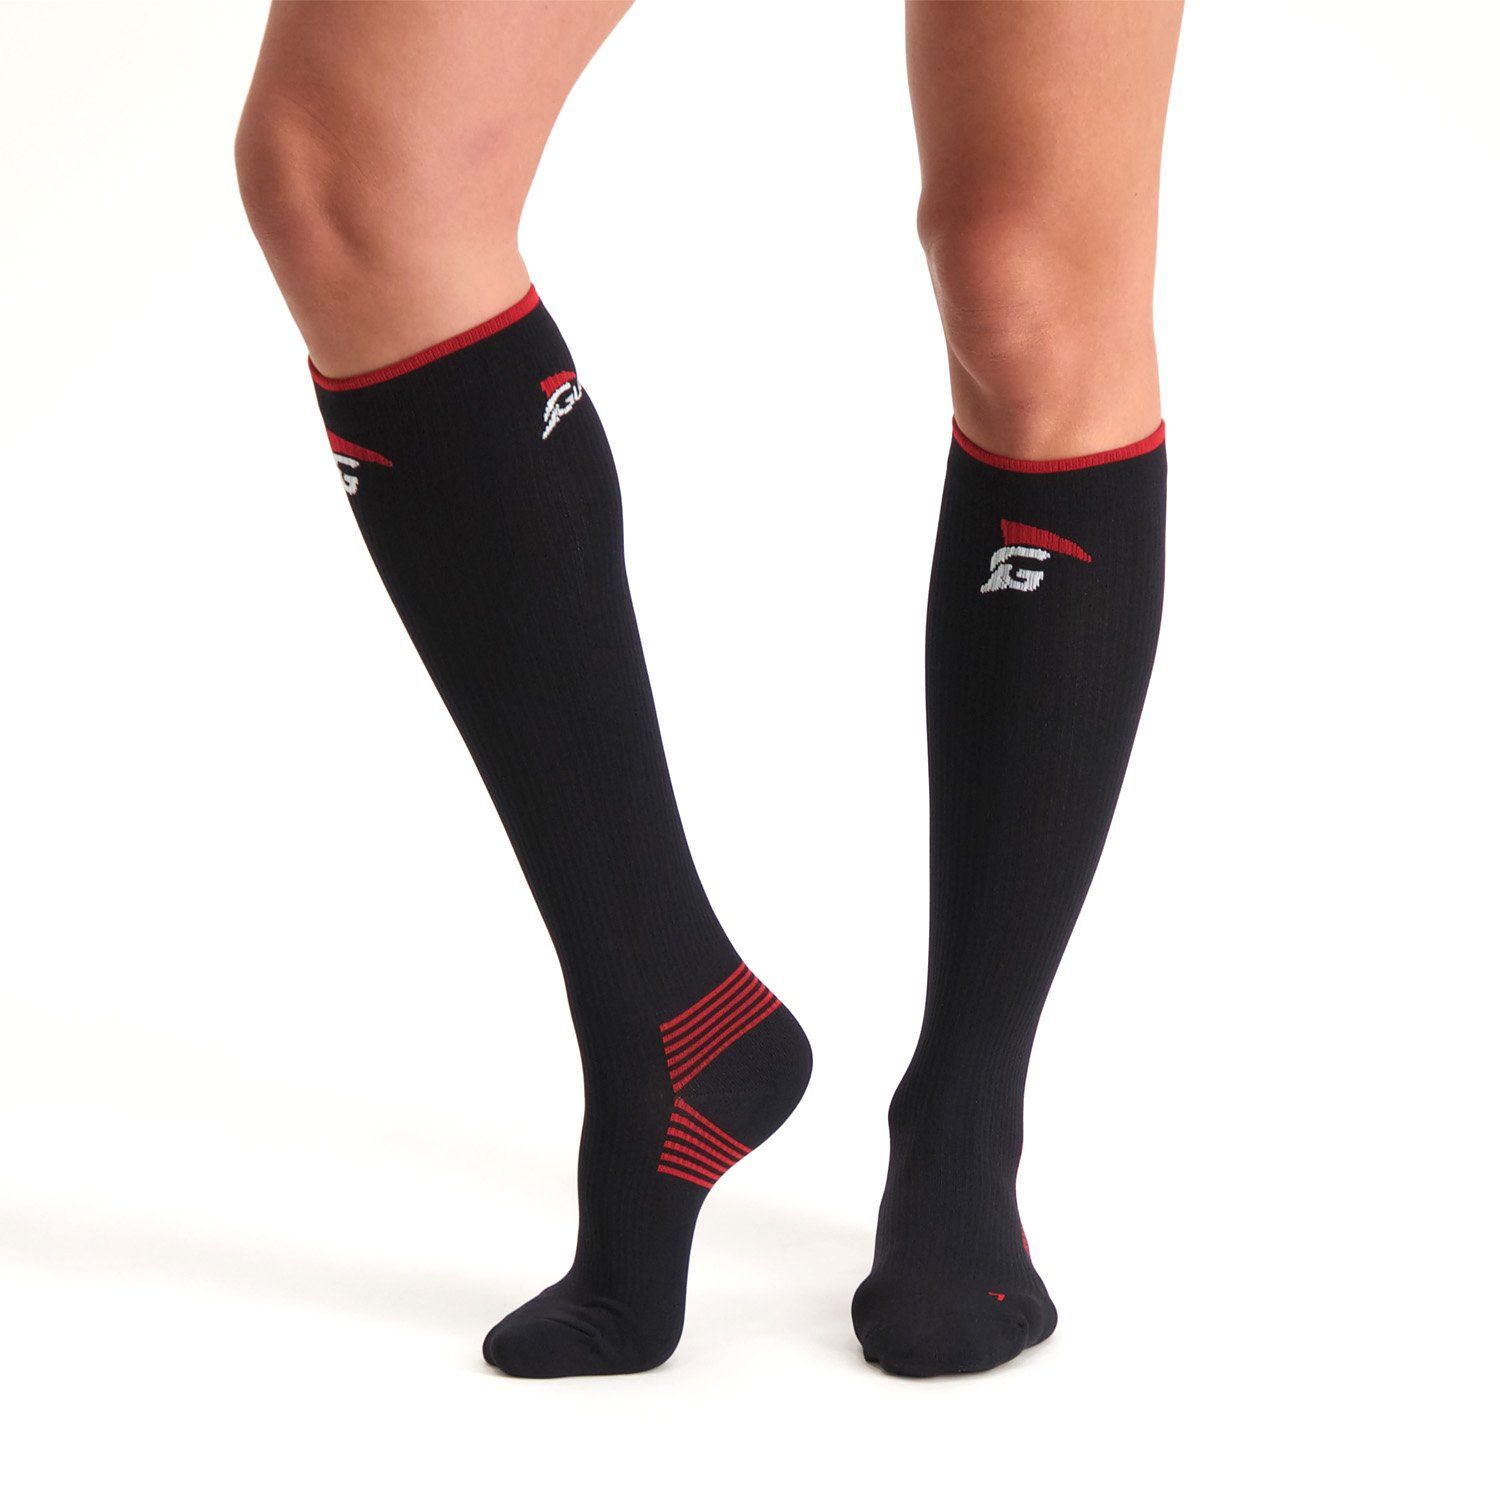 gladiator sports premium compression stockings worn by model